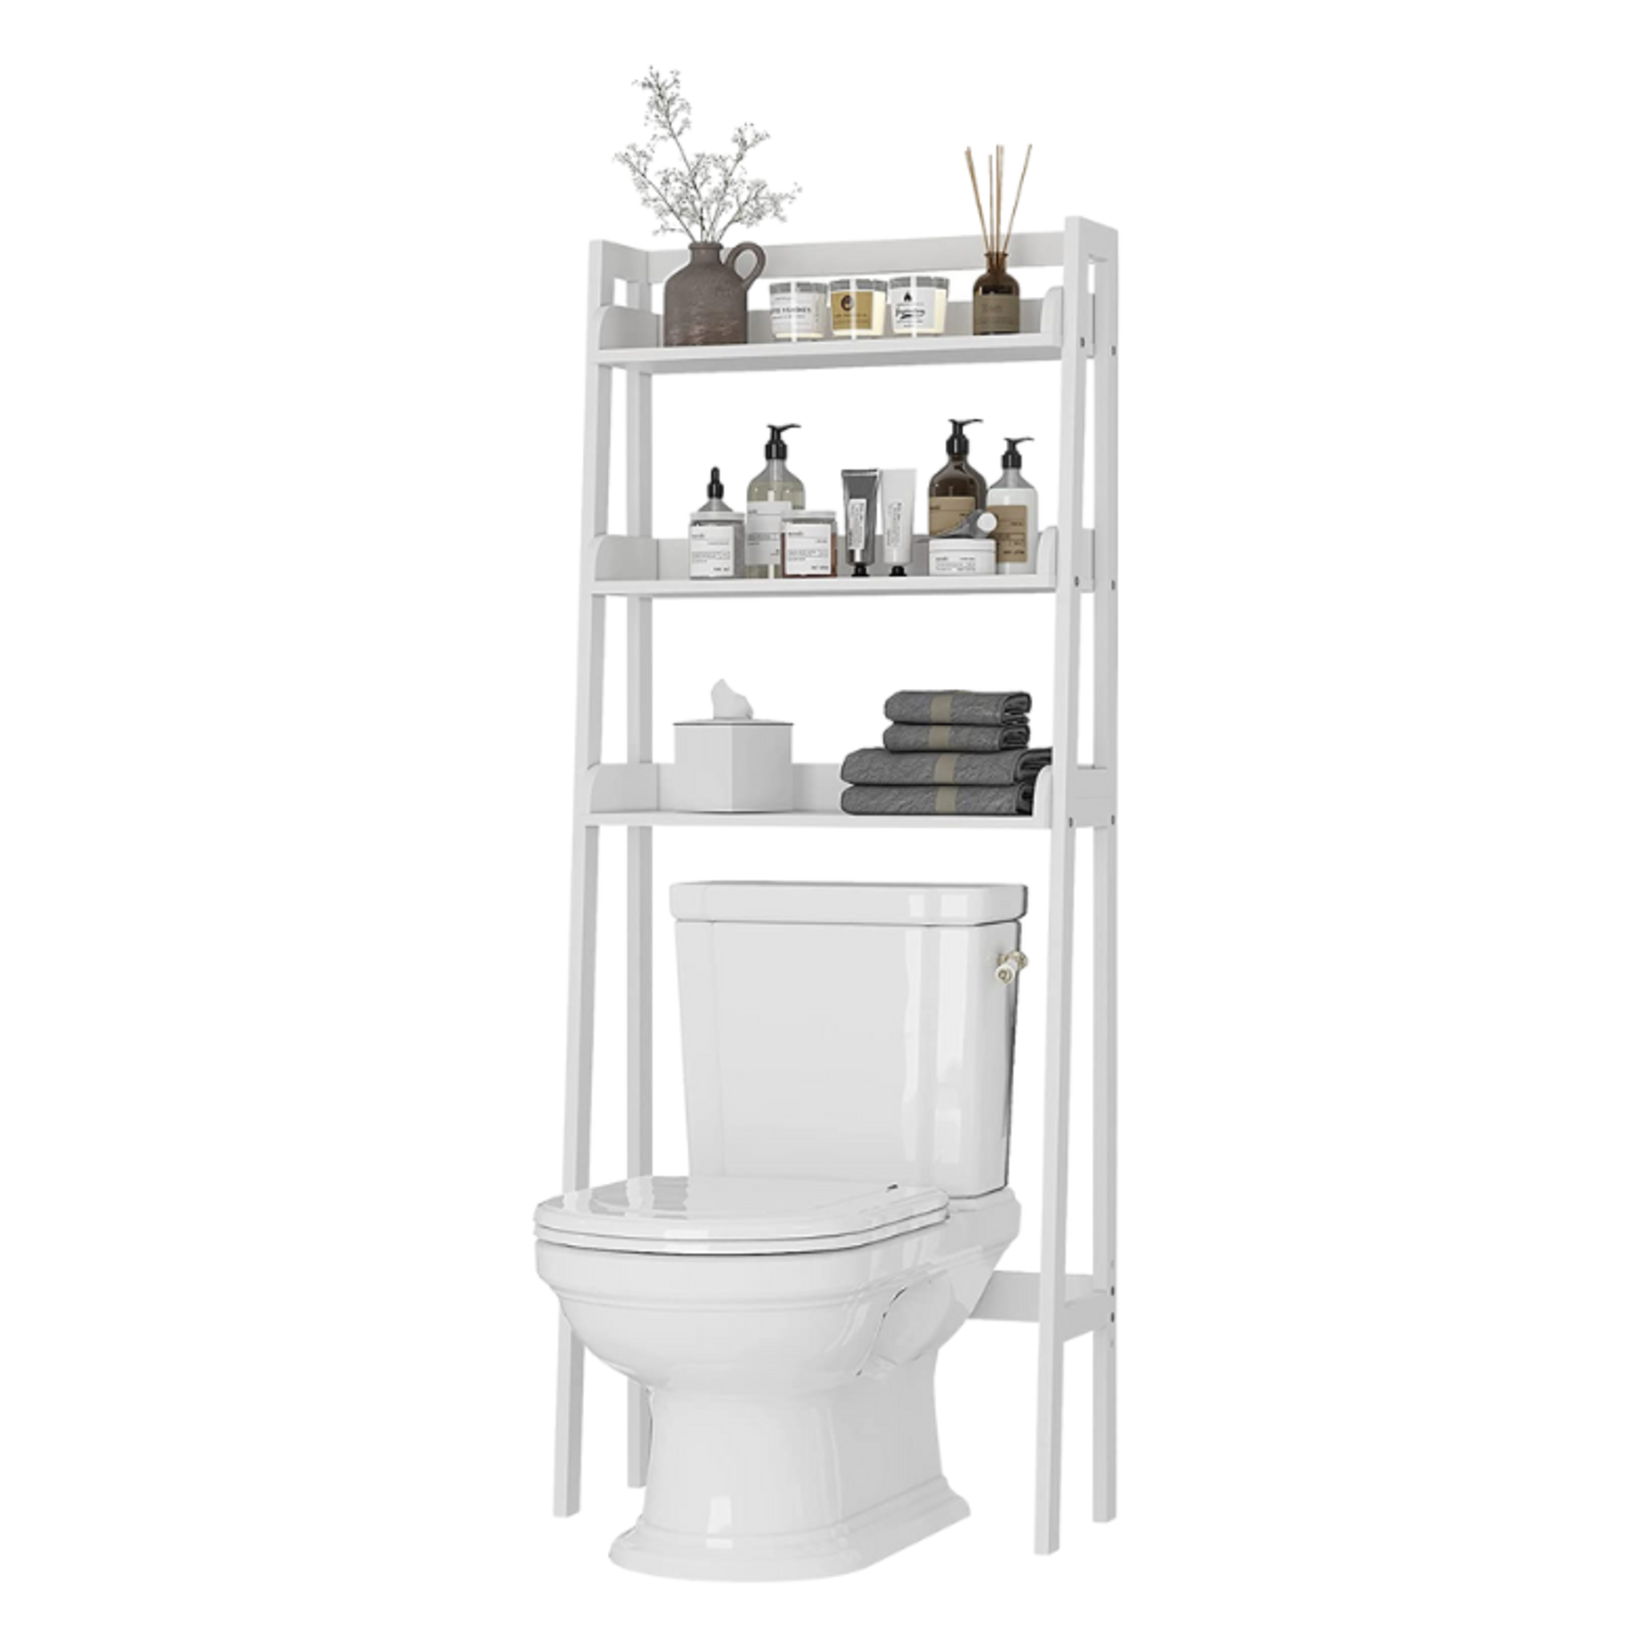 UTEX Ladder Bathroom Spacesaver- White